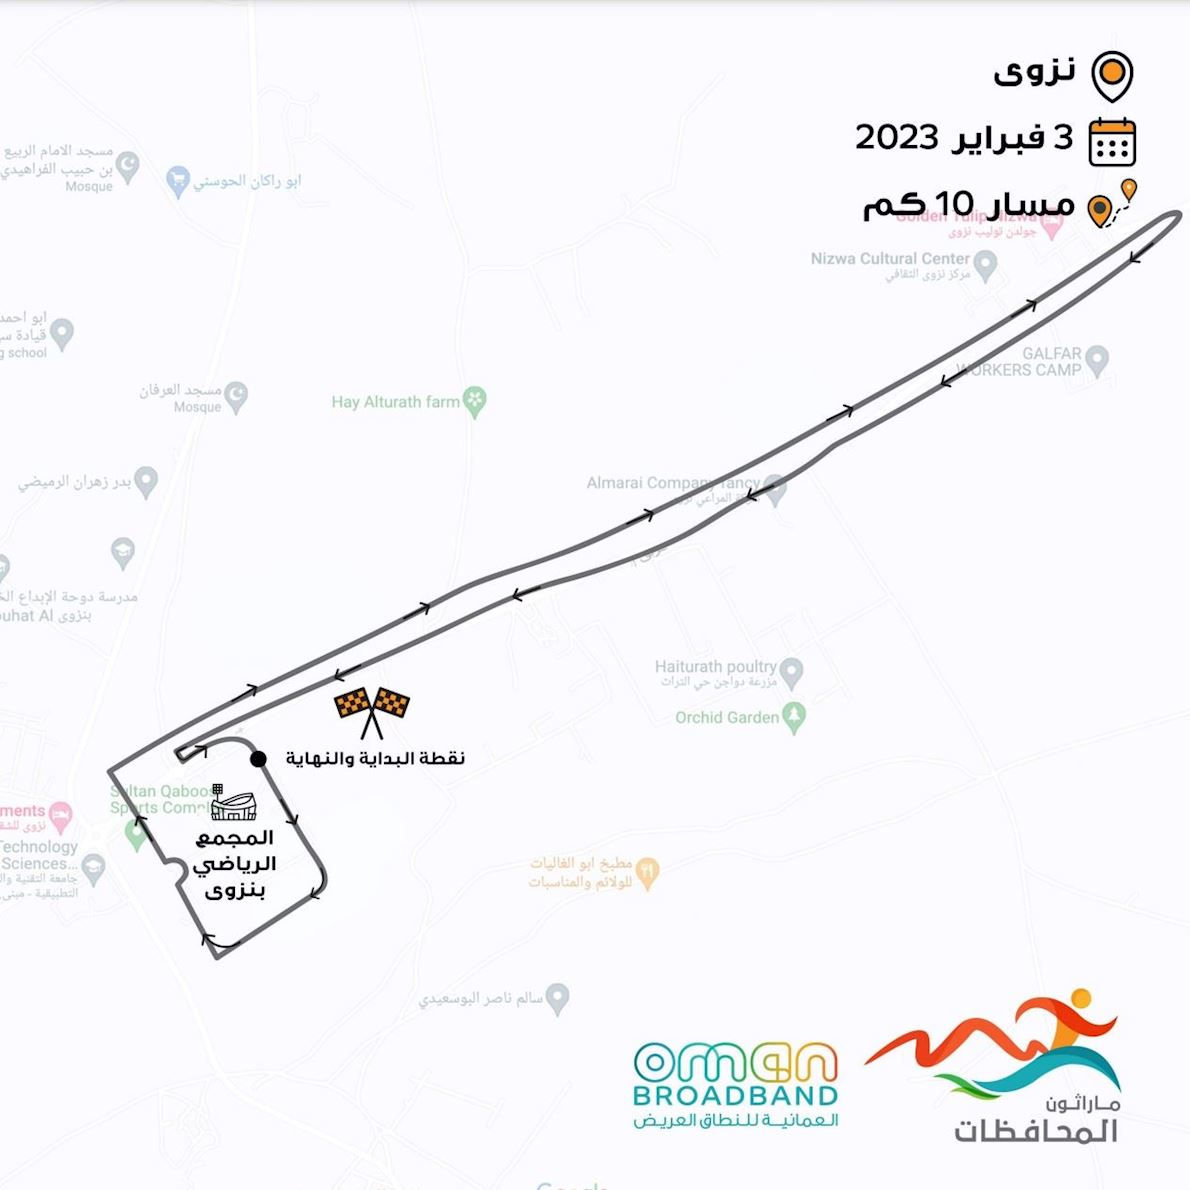 Oman Broadband Governorates Marathon Route Map